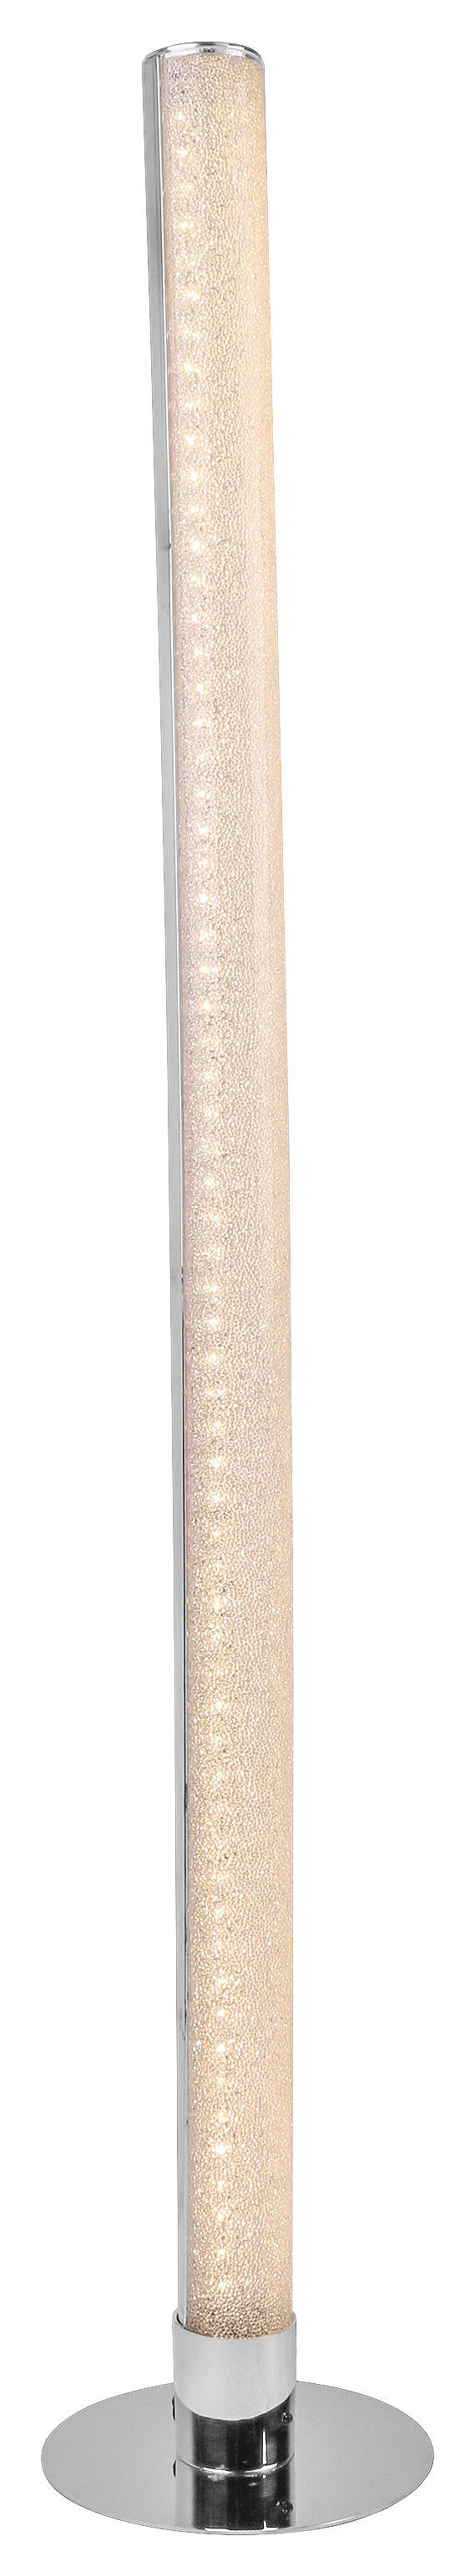 POCOline Stehleuchte Chrom klar Metall Acryl H/D: ca. 104x18 cm Polly - klar/Chrom (18,00/104,00cm)